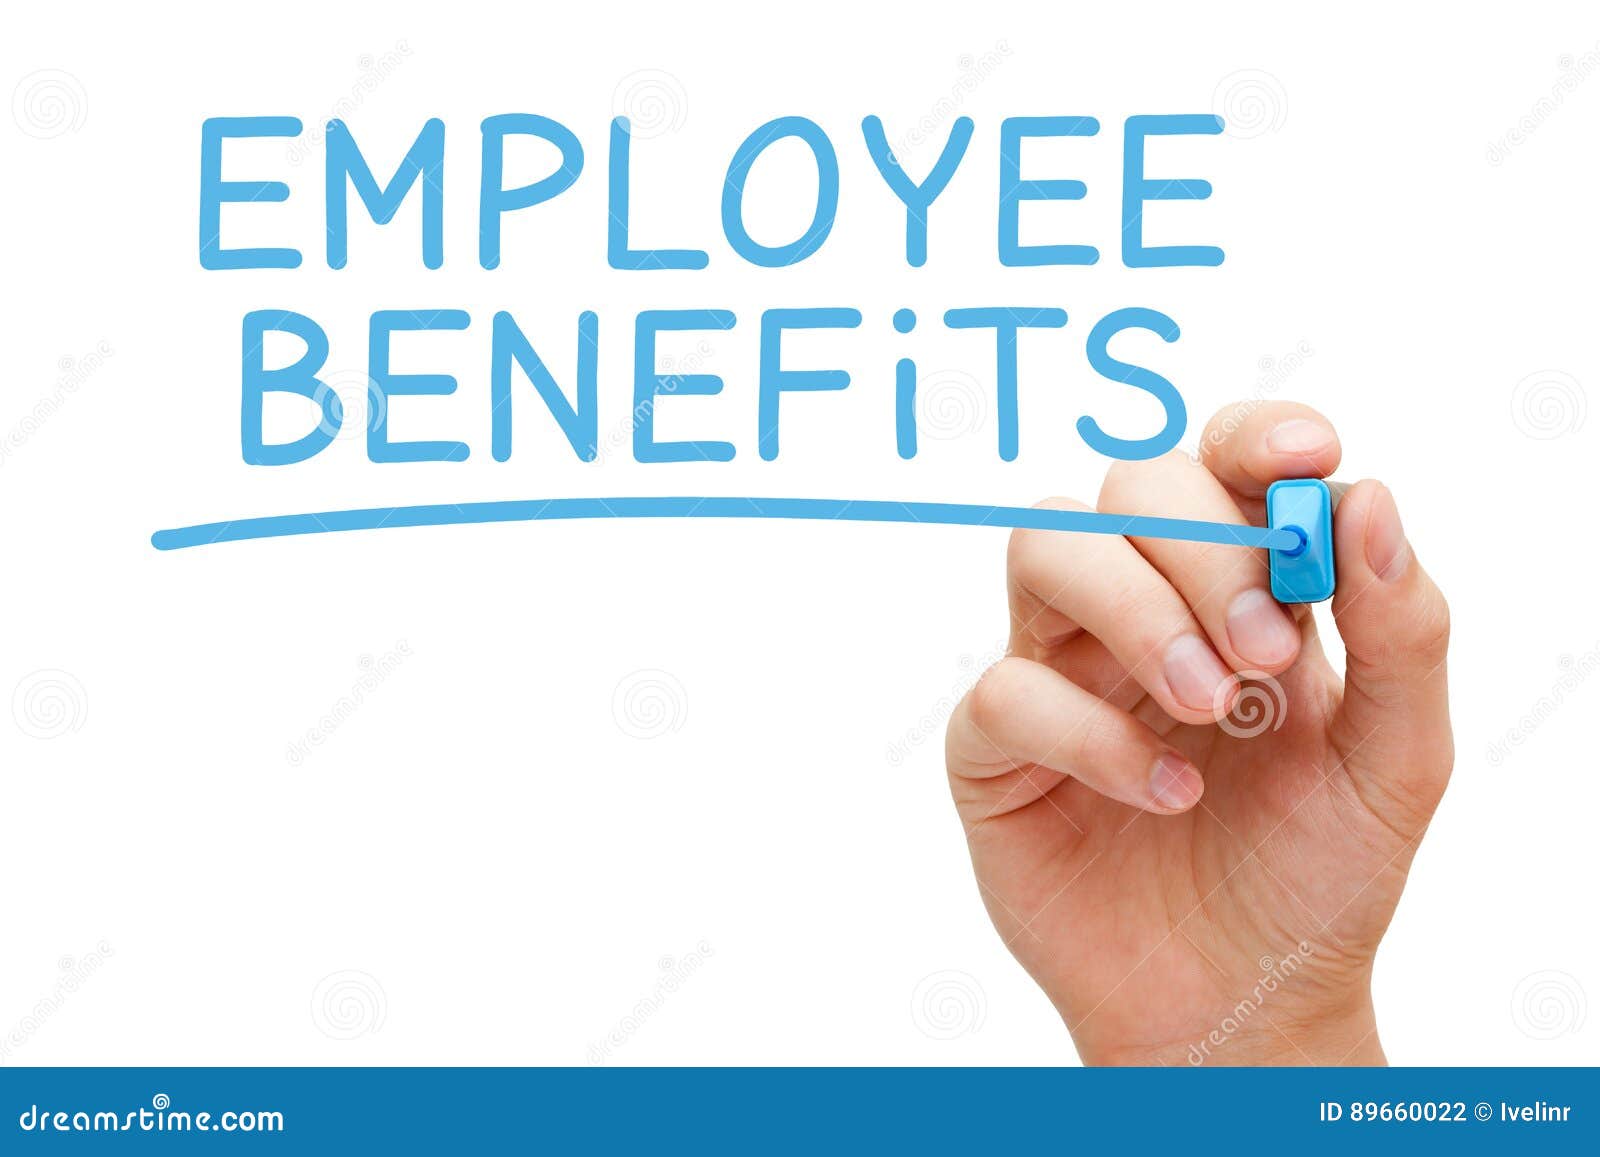 employee benefits blue marker